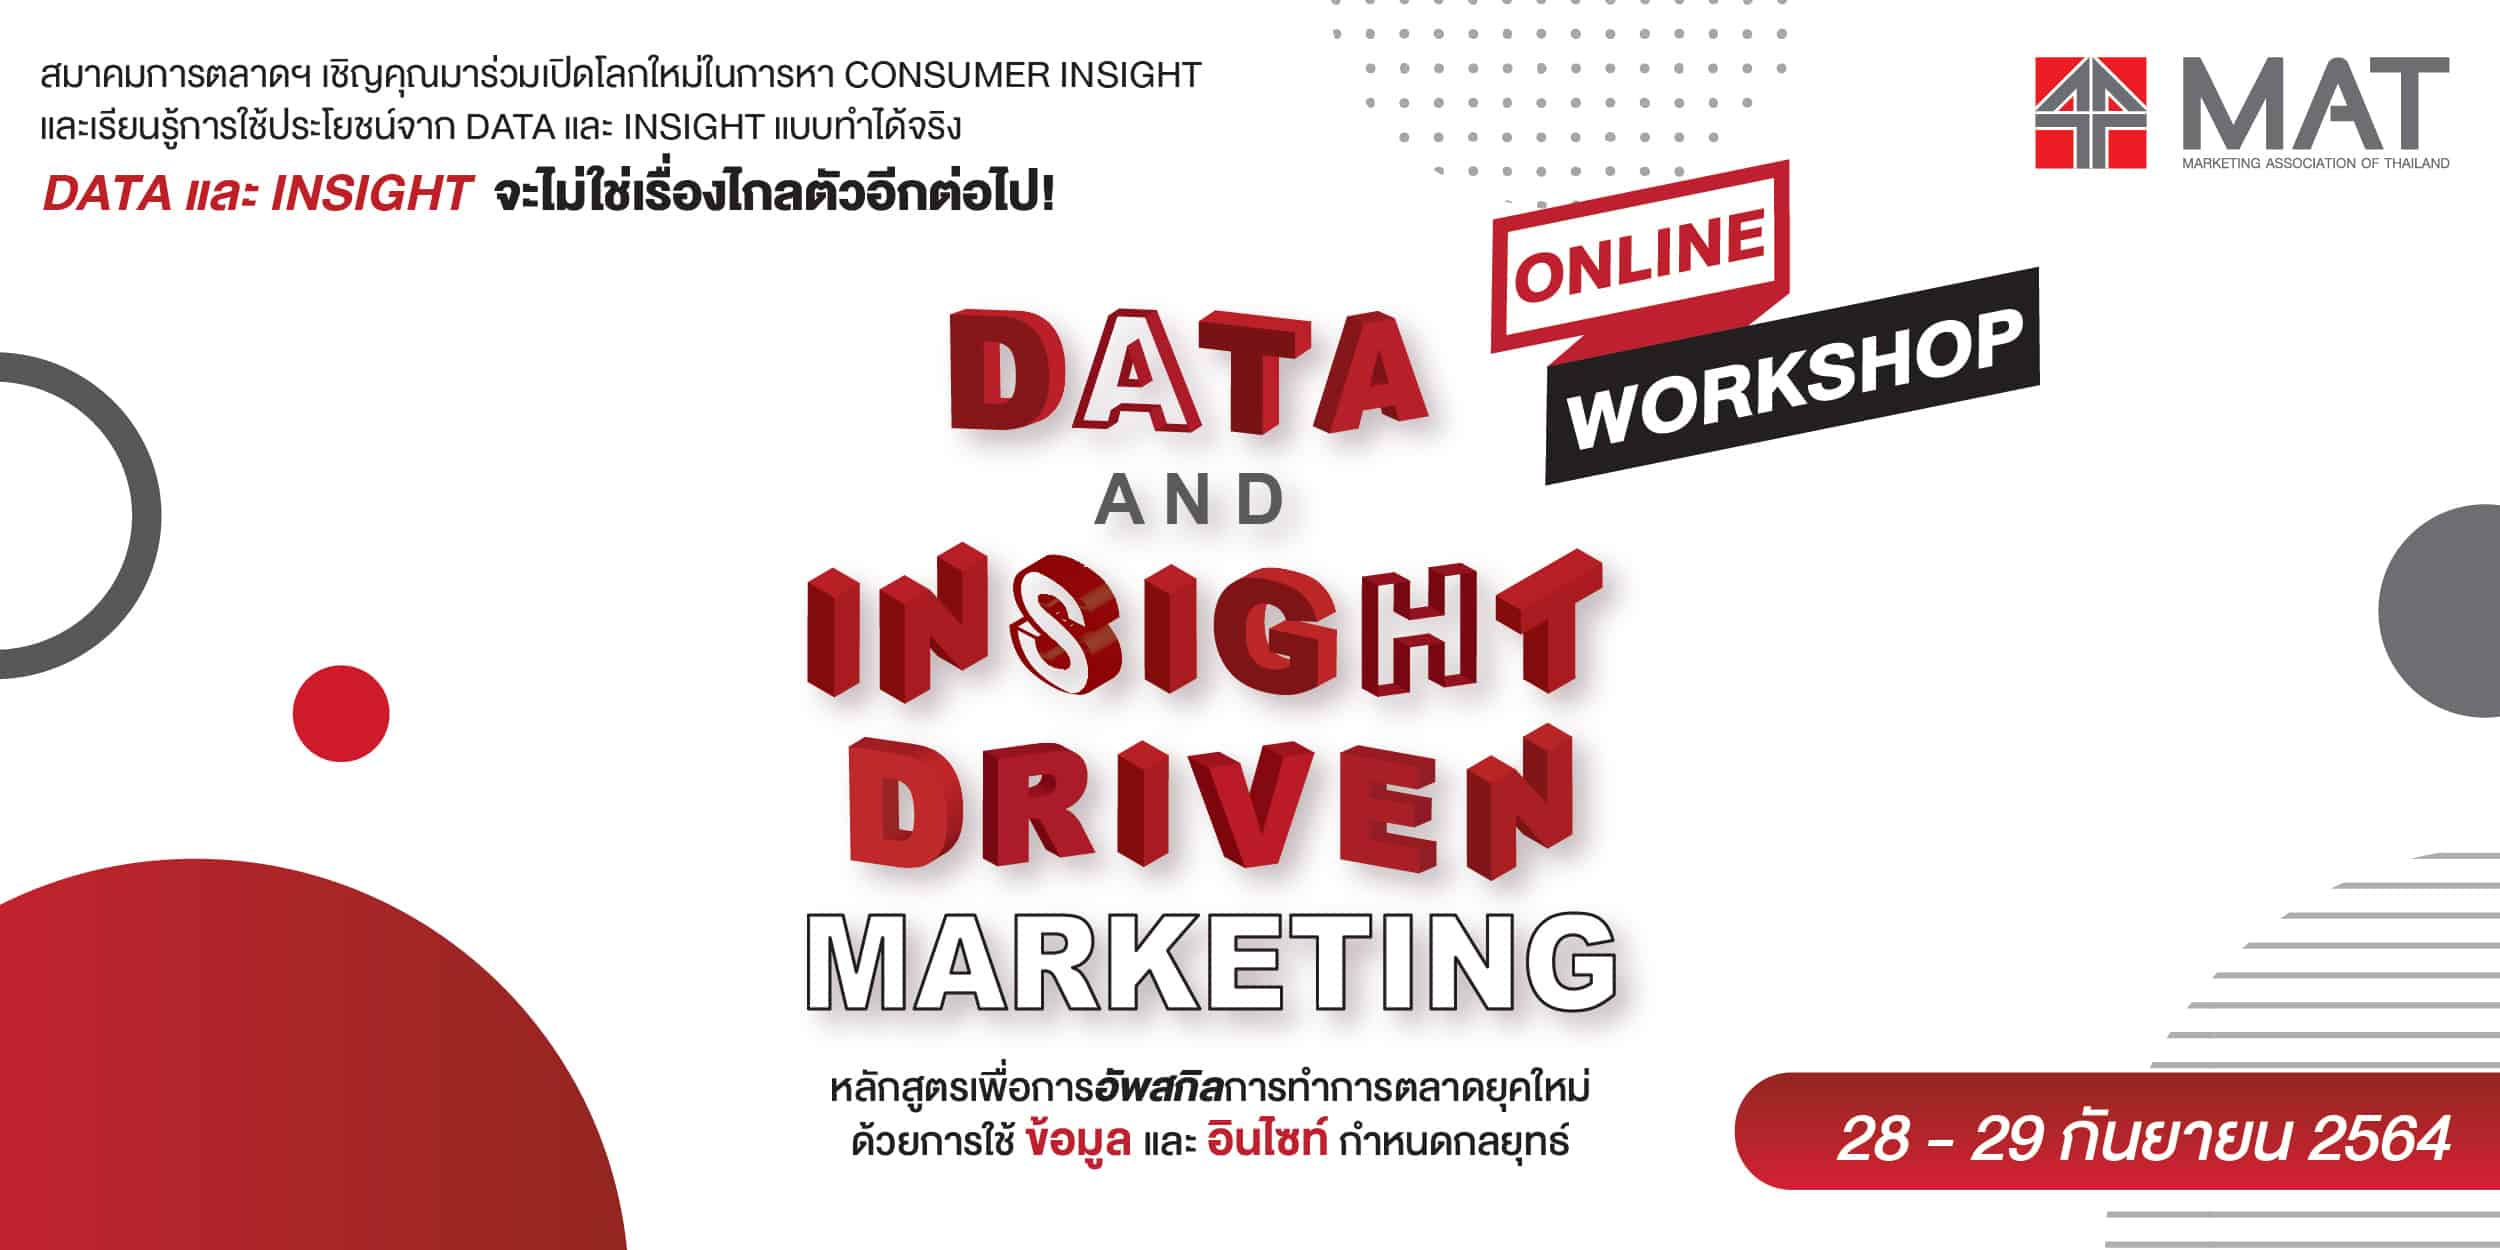 Data And Insight Driven Marketing [Online] - สมาคมการตลาดแห่งประเทศไทย